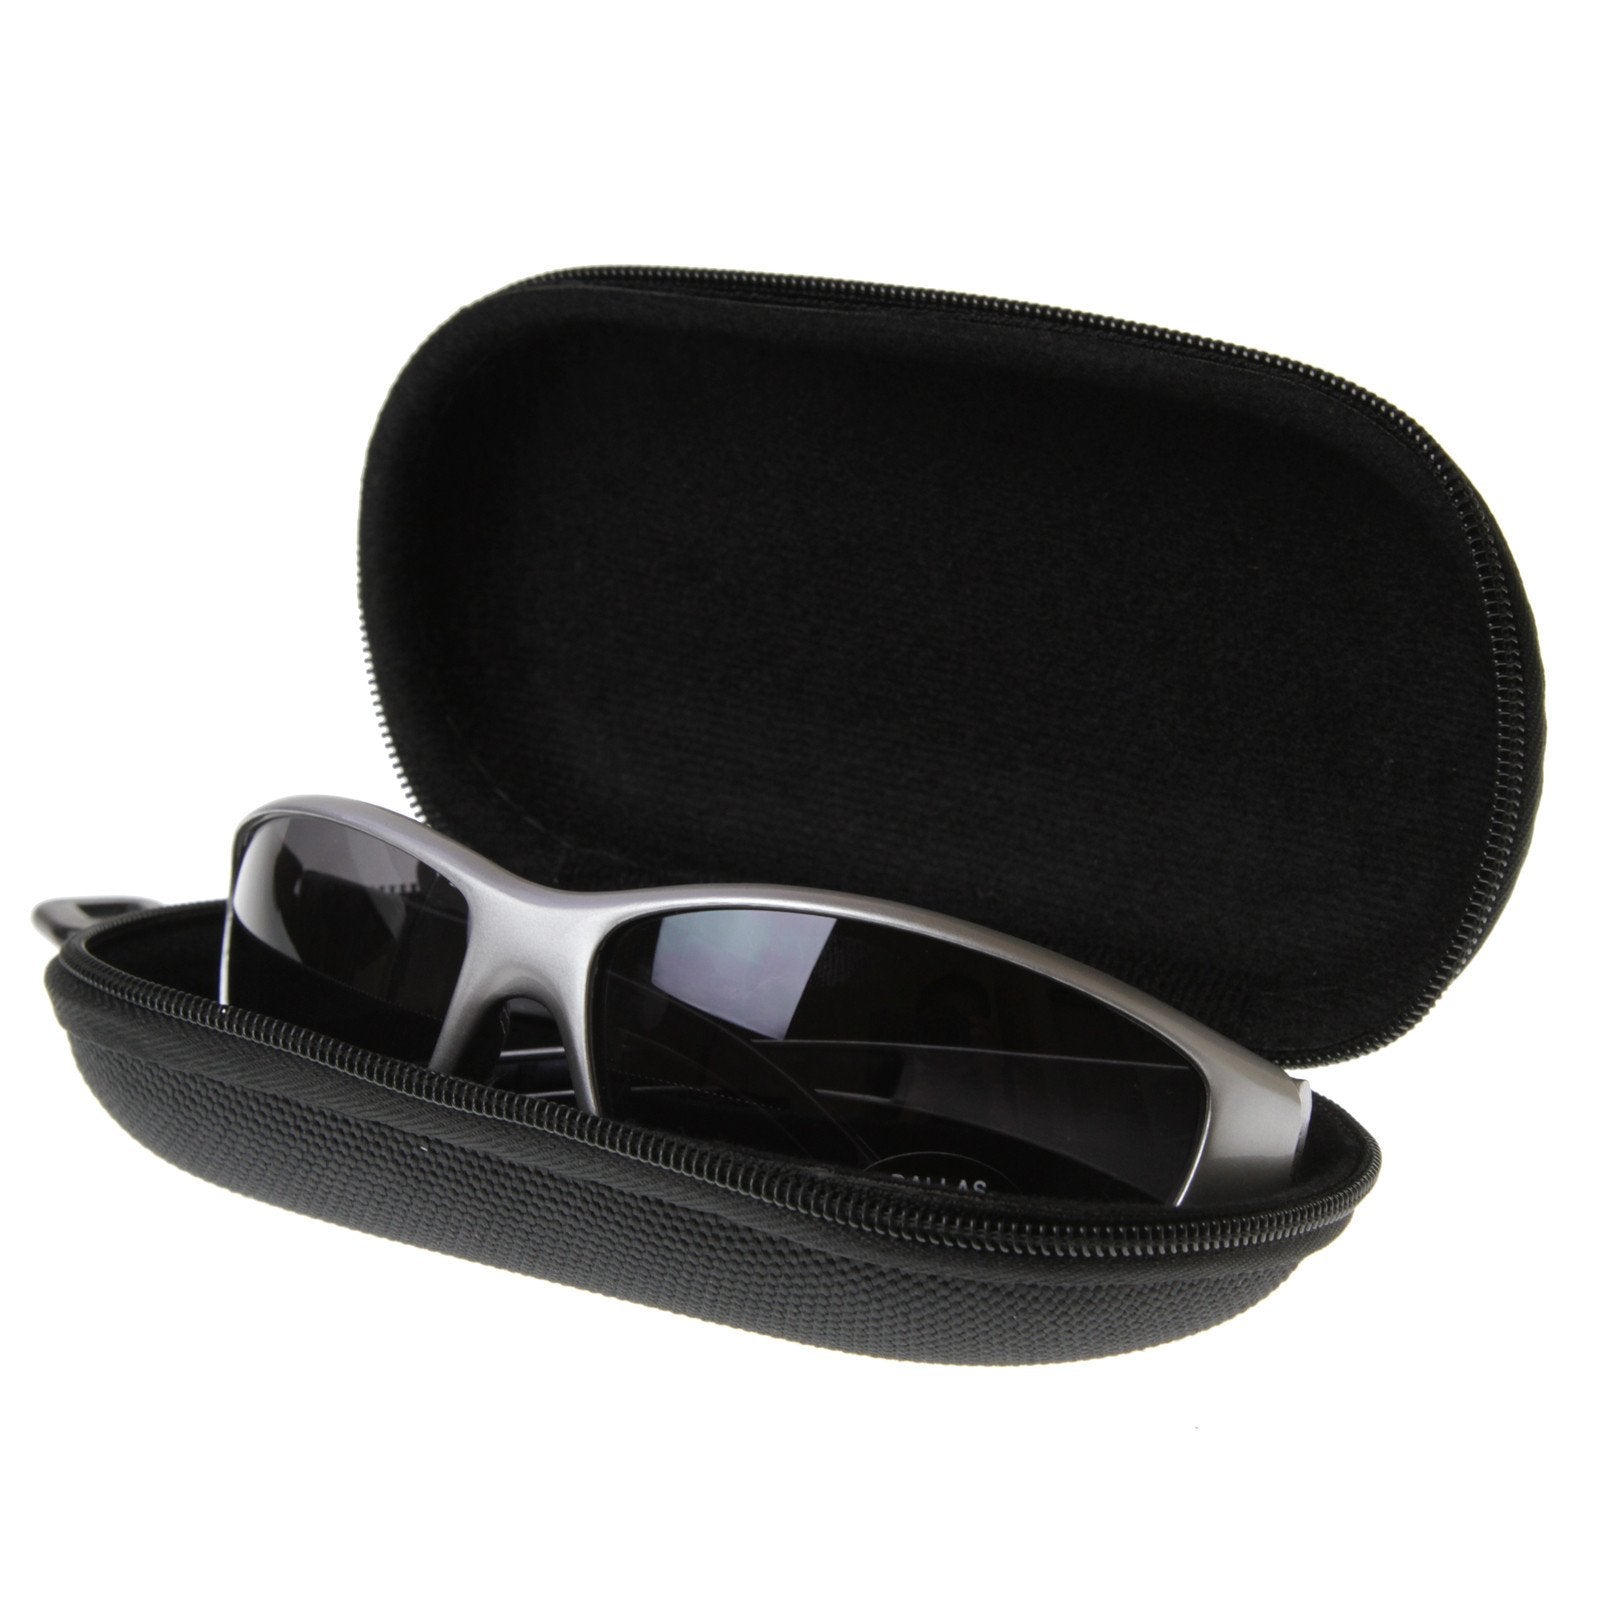 Nueva cápsula con cremallera, estuche para gafas de sol, bolsa de nailon con llavero (negro) 1006